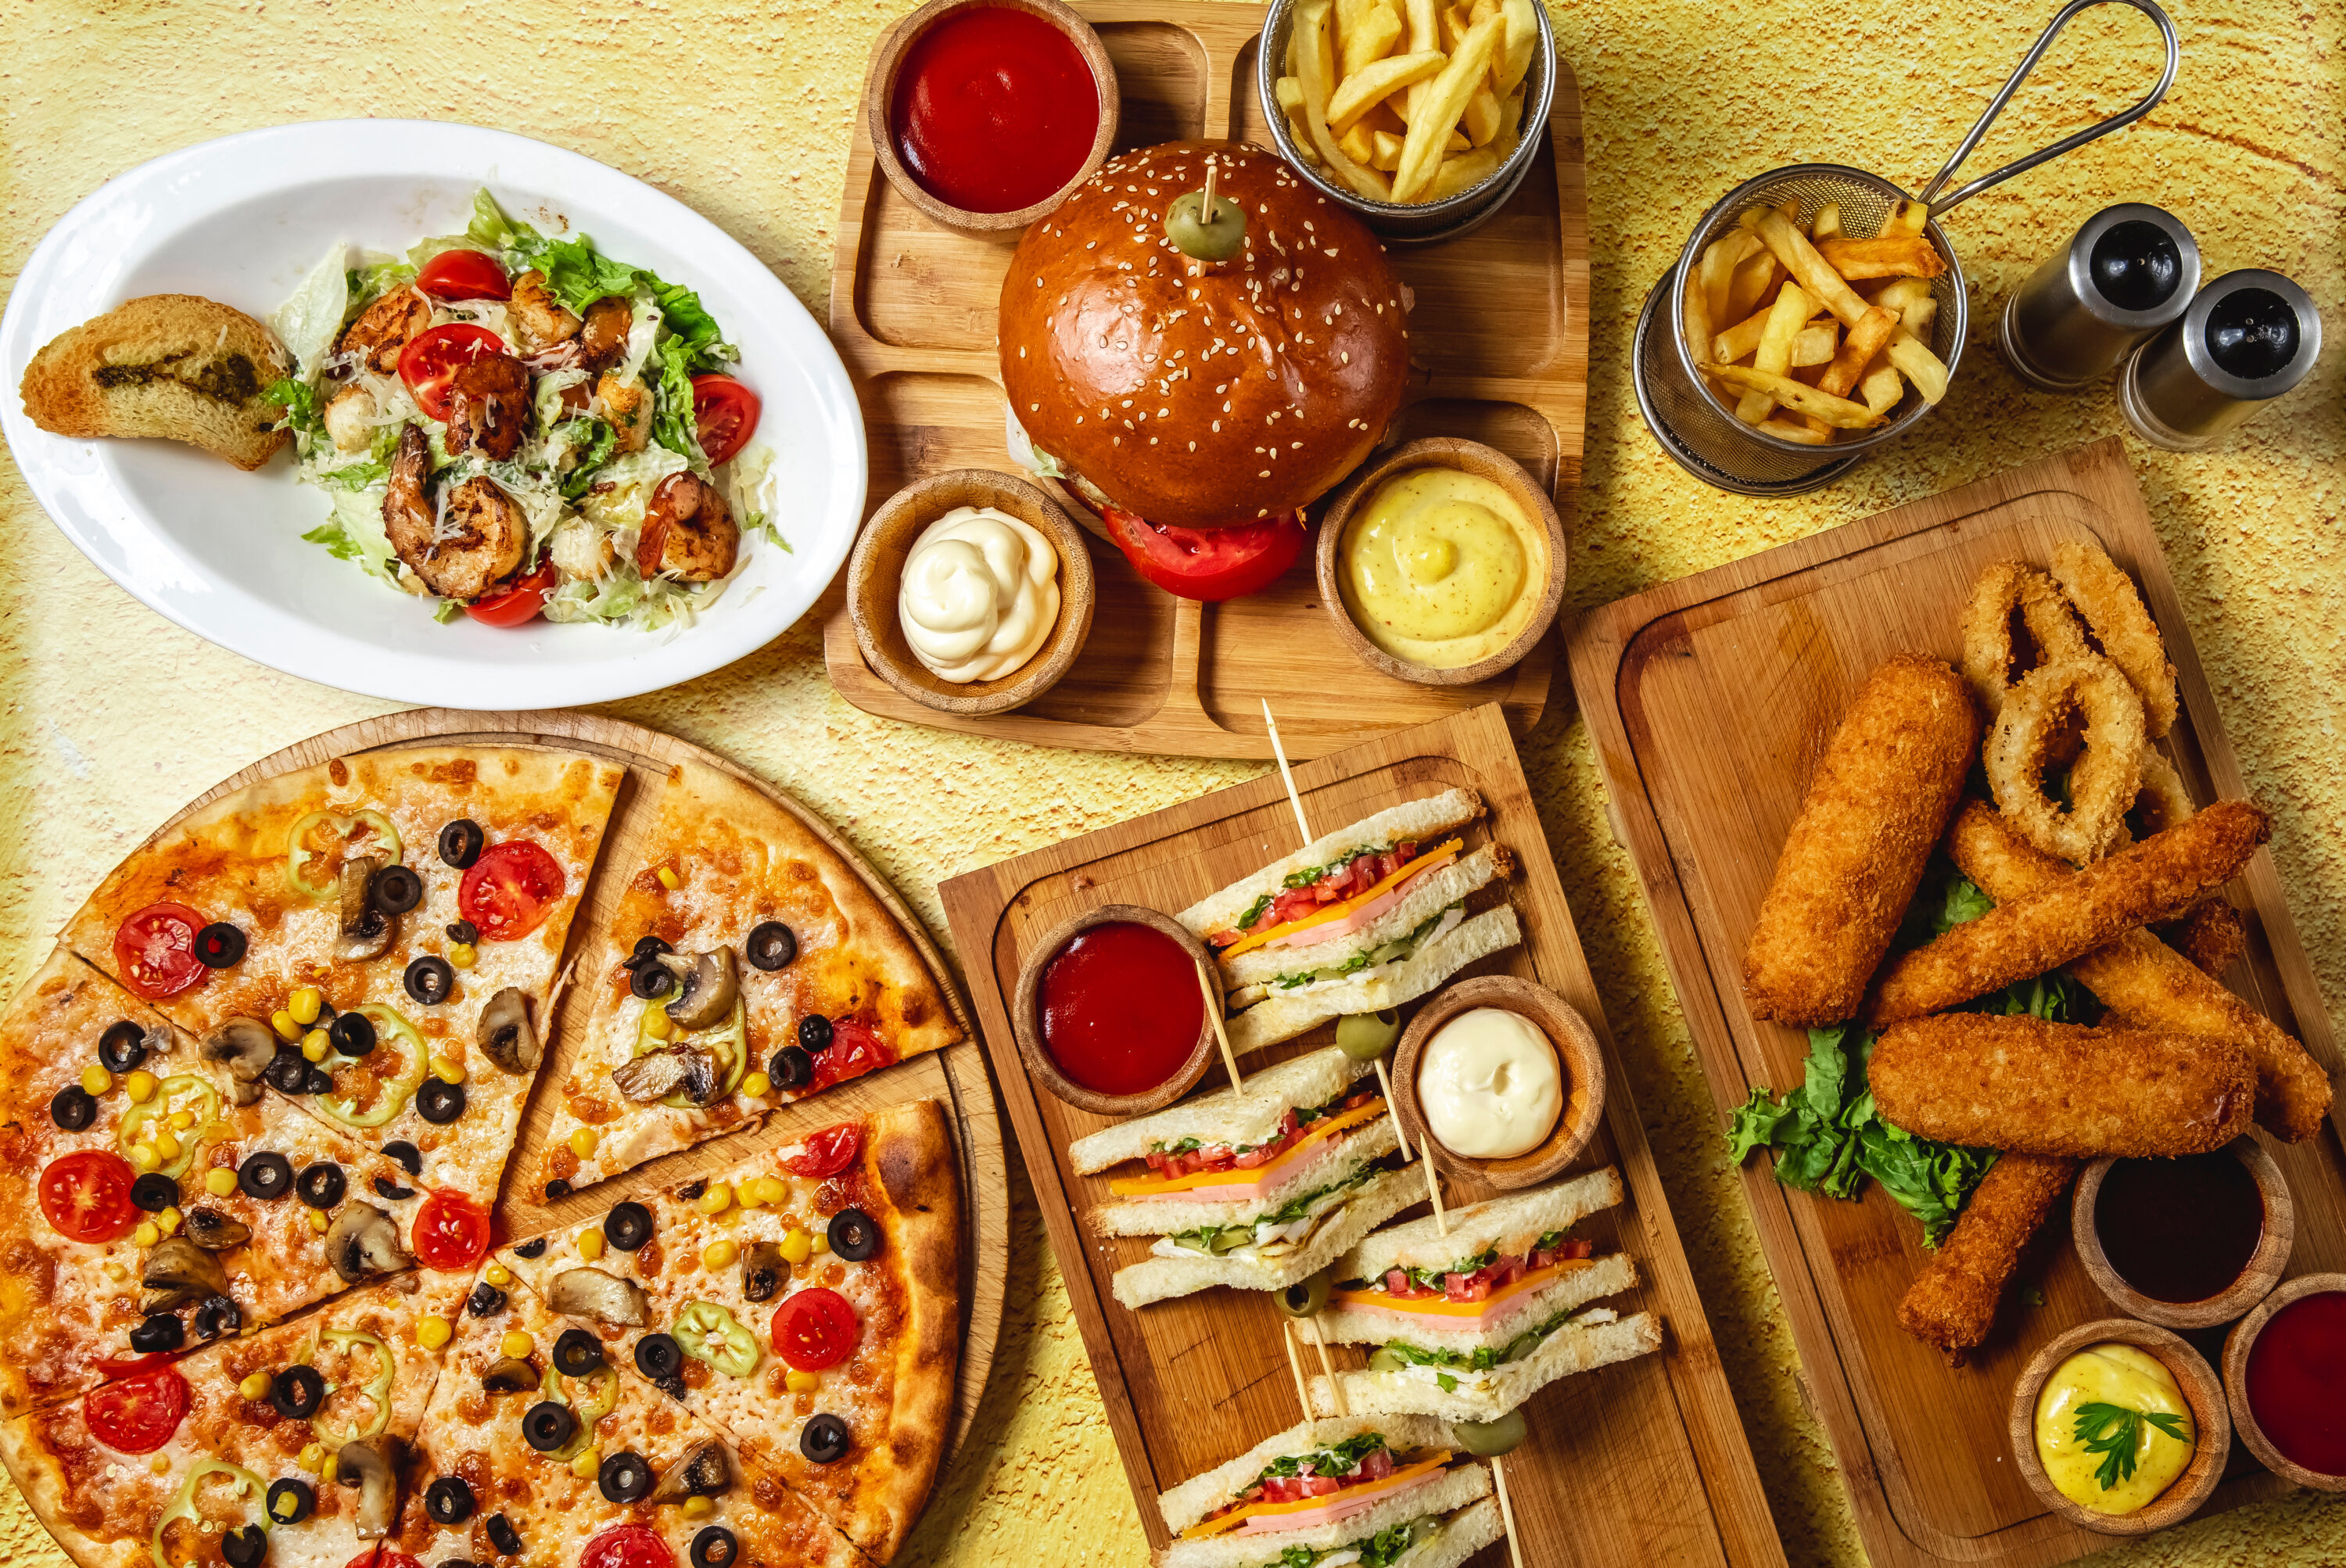 fast-food-mix-mozzarella-sticks-club-sandwich-hamburger-mushroom-pizza-caesar-shrimp-salad-french-fries-ketchup-mayo-and-cheese-sauces-on-the-table